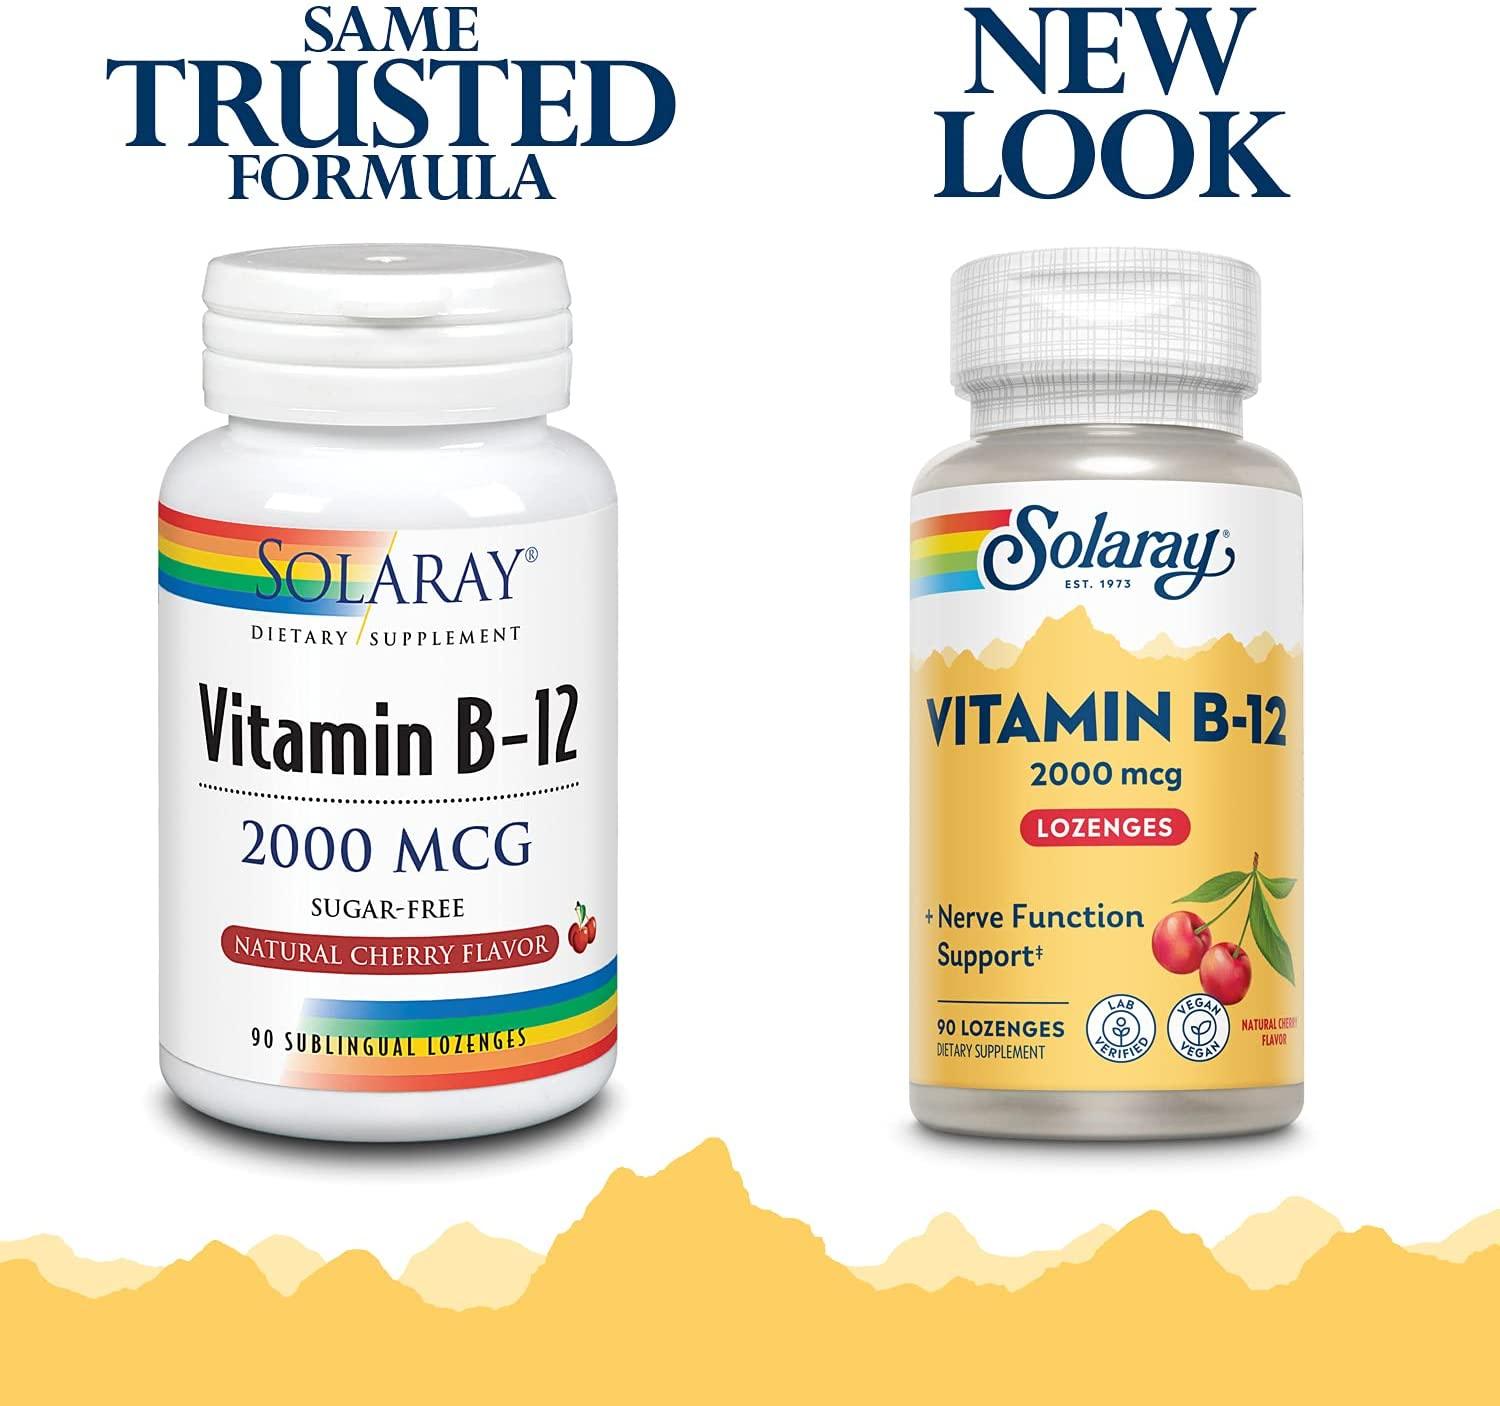 Solaray Vitamine B12 2000mcg - mondialpharma.com